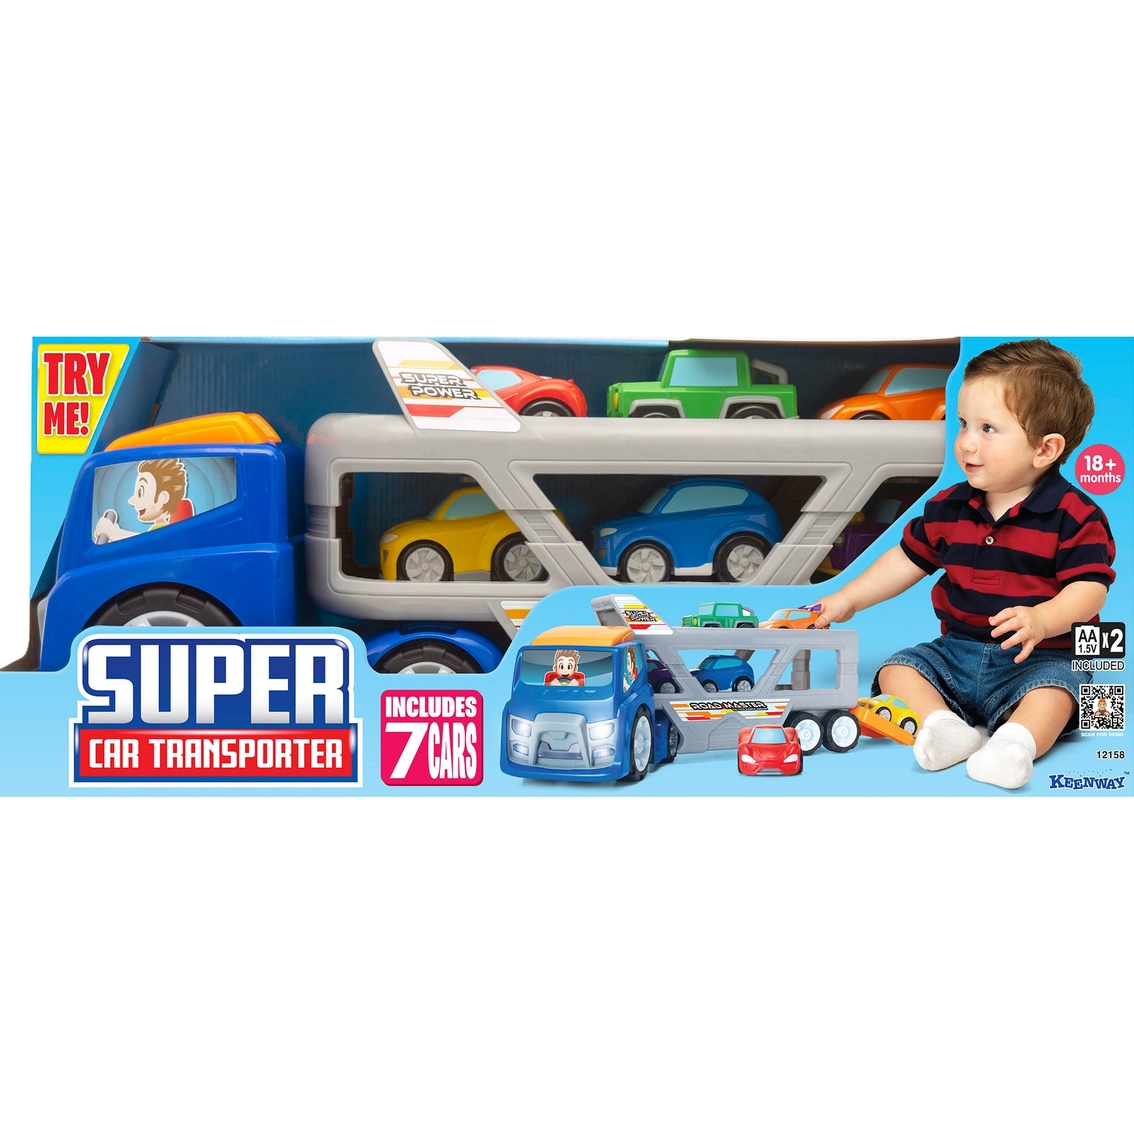 Keenway Super Car Transporter Toy